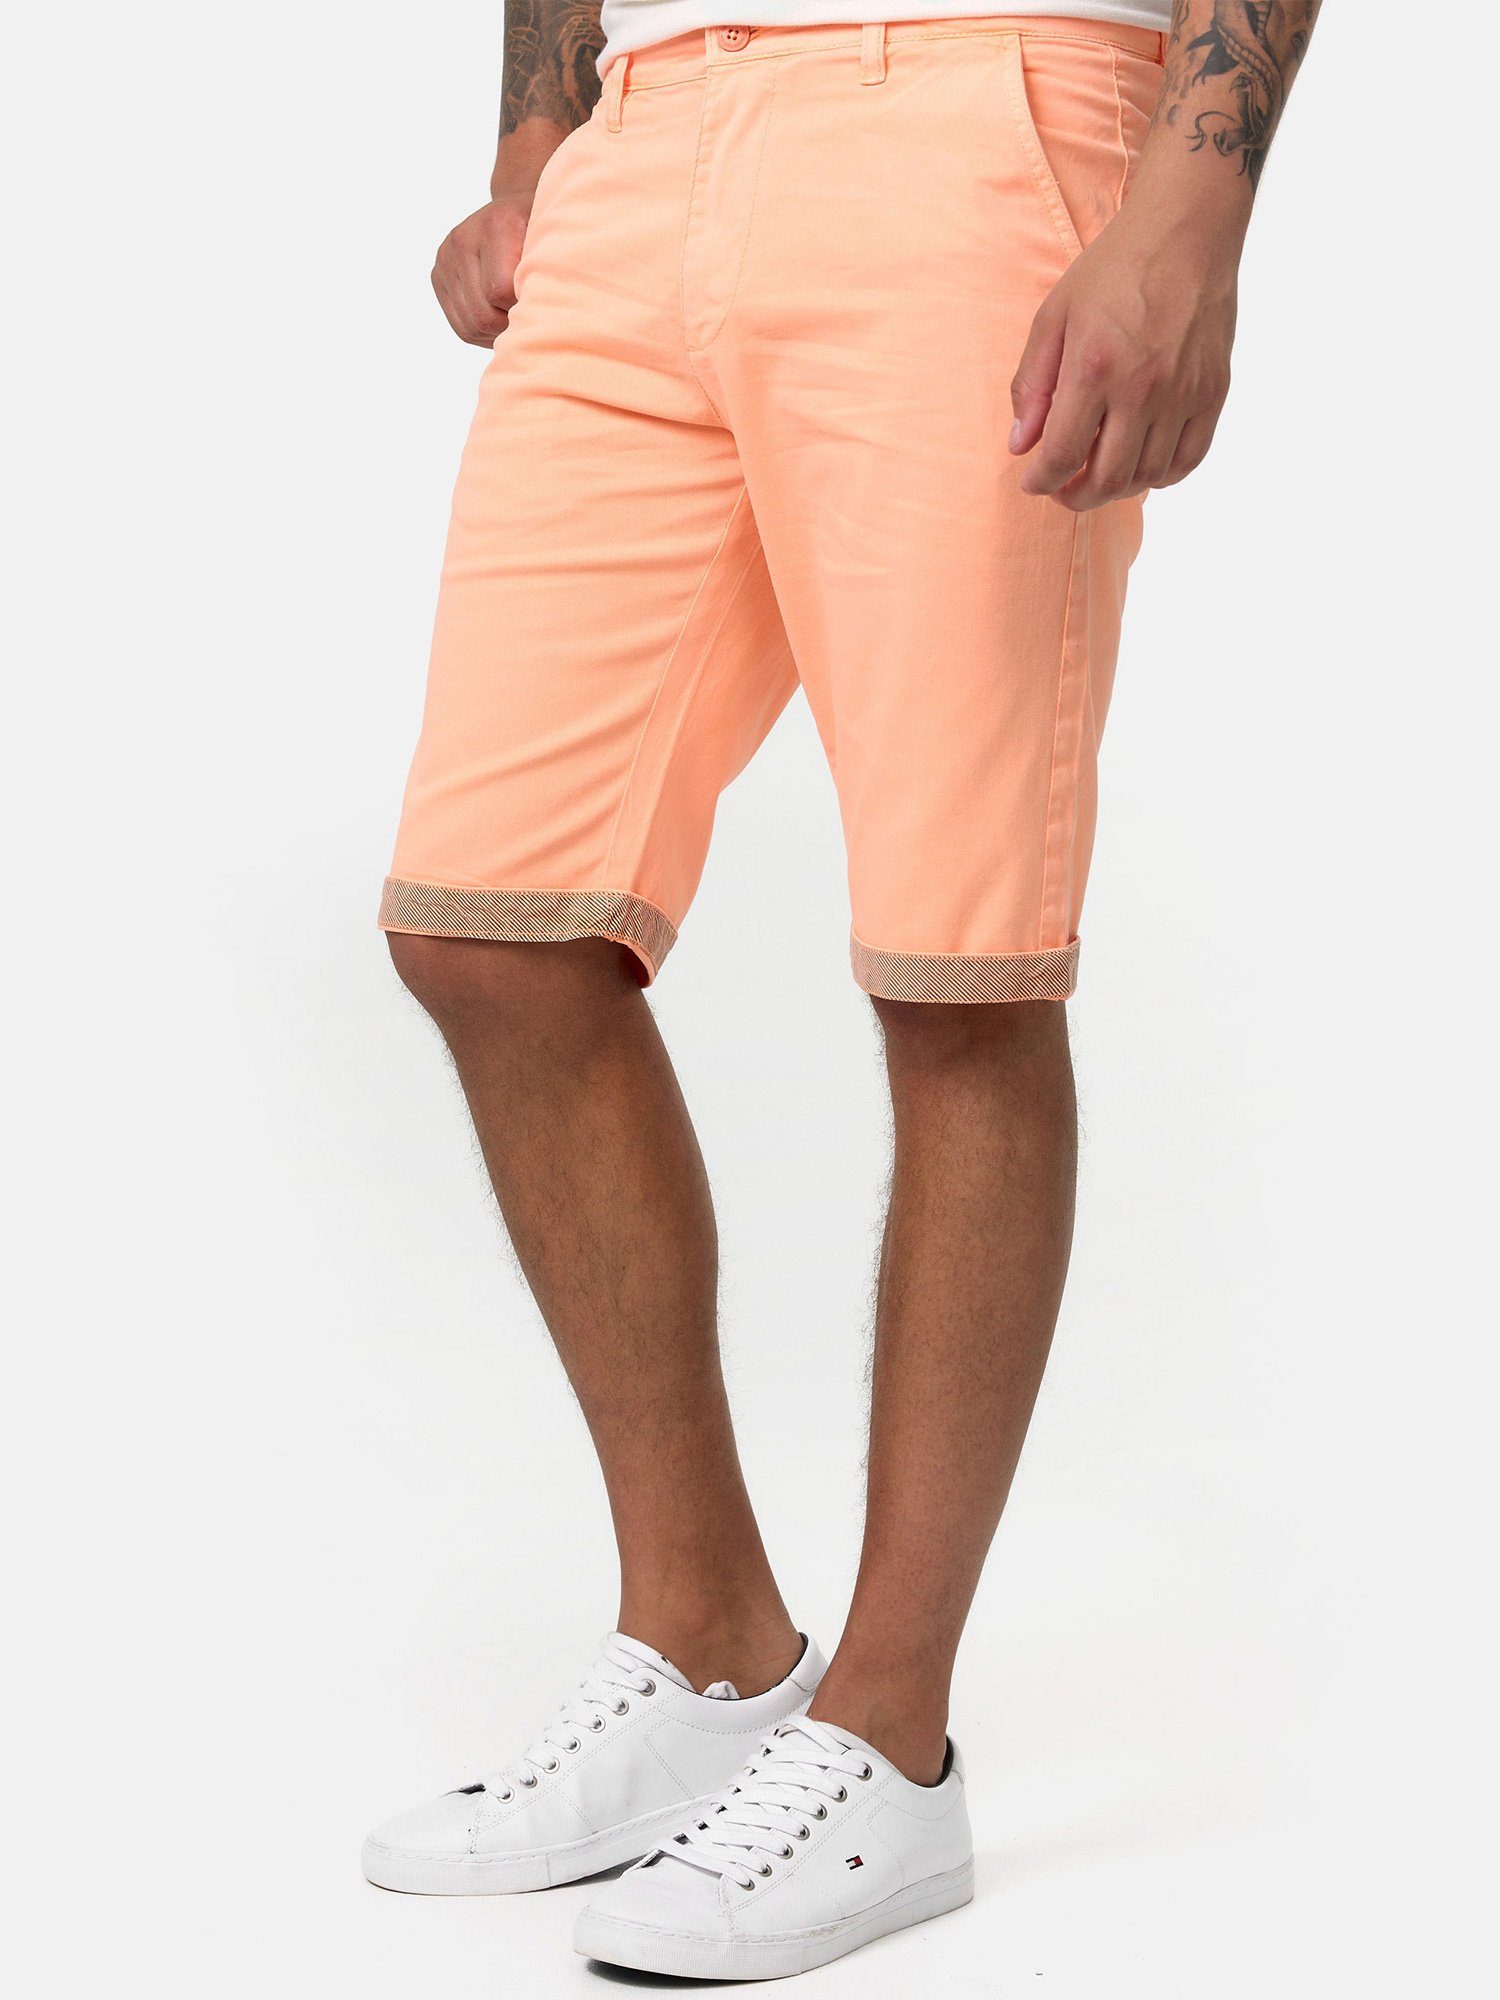 Tazzio Hose Orange Shorts A206 Chino Chinoshorts